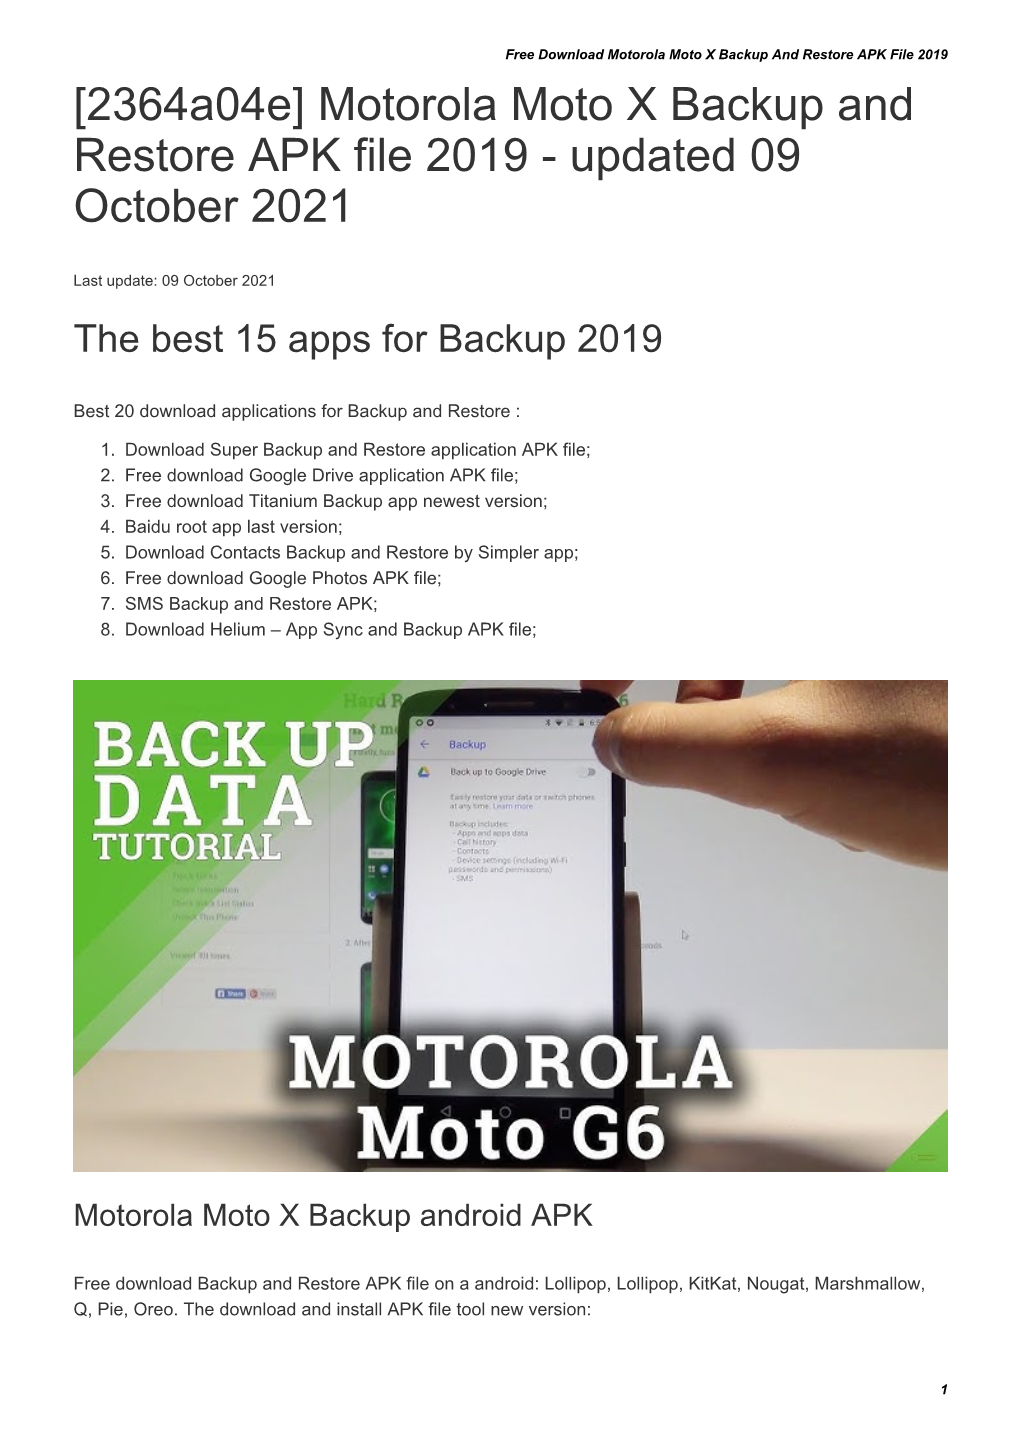 [Bda460a3] Motorola Moto X Backup and Restore APK File 2019